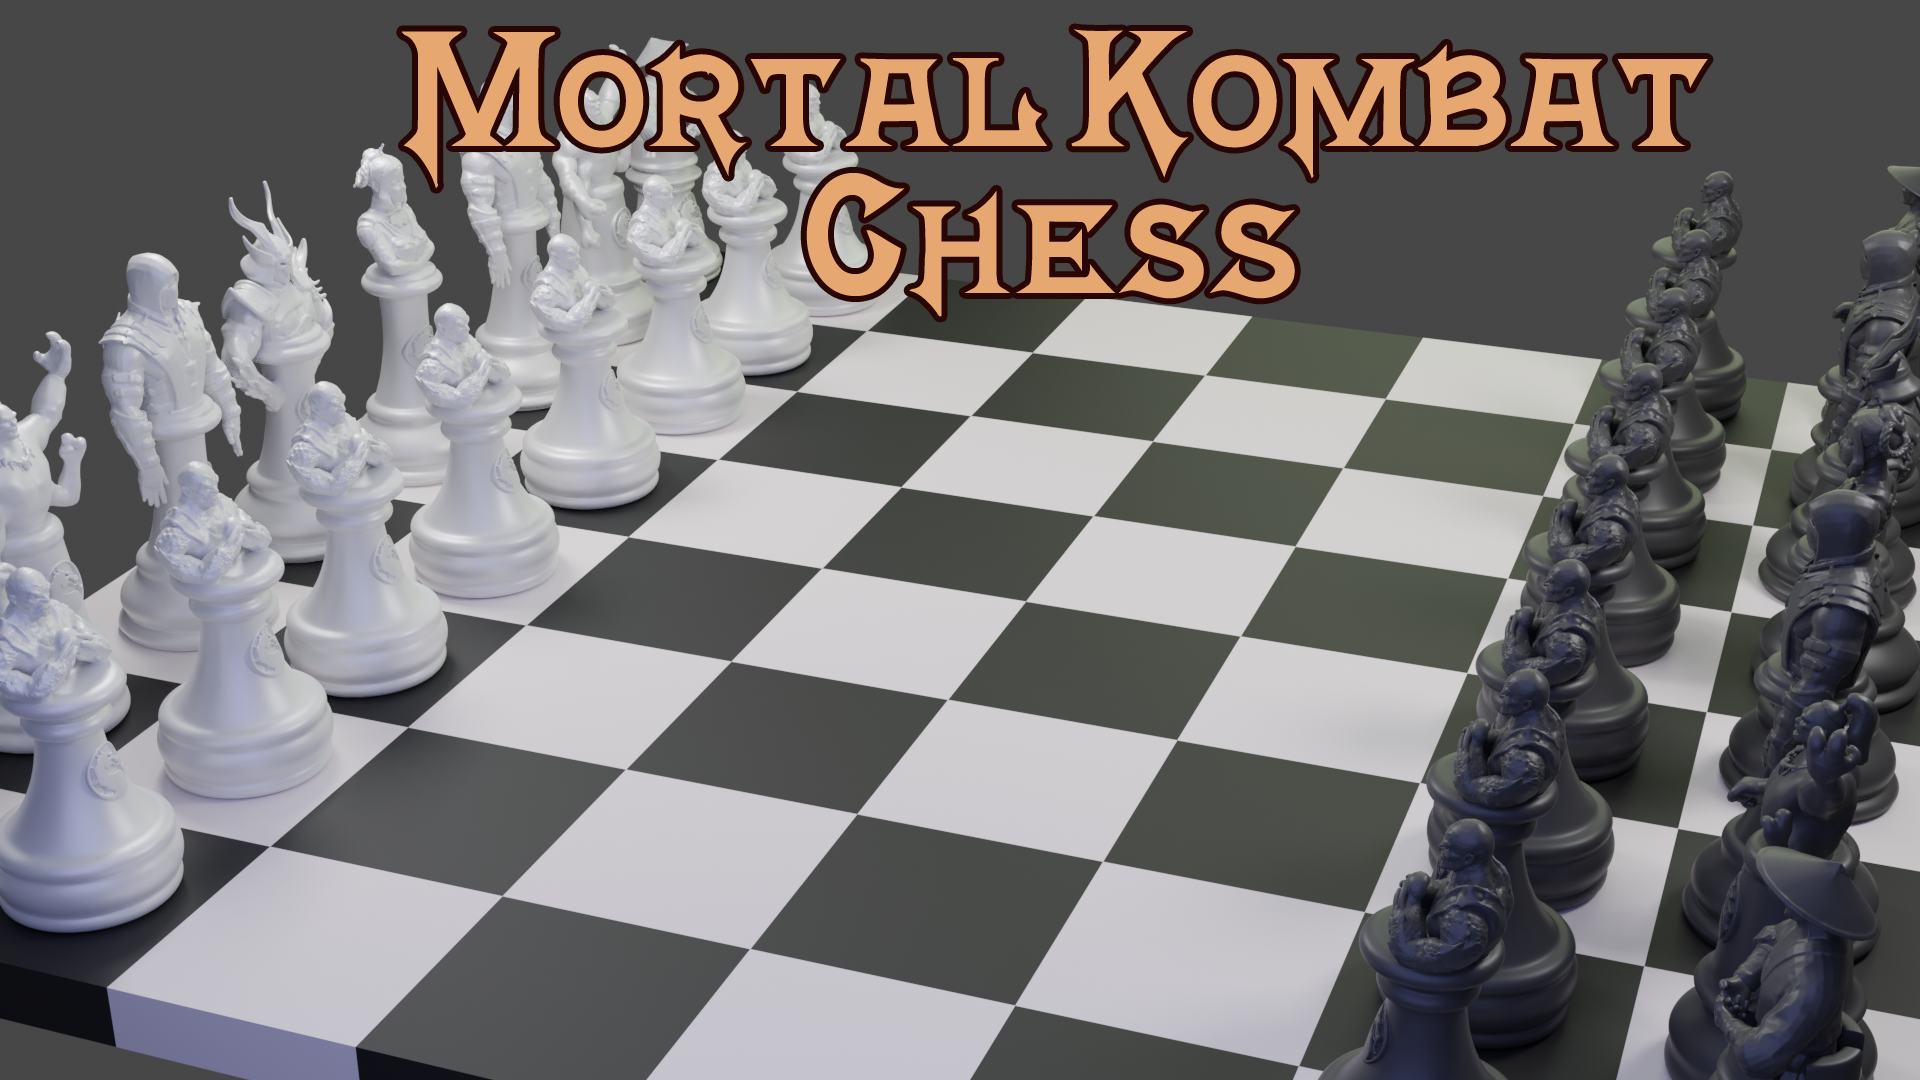 play mortal kombat chess online